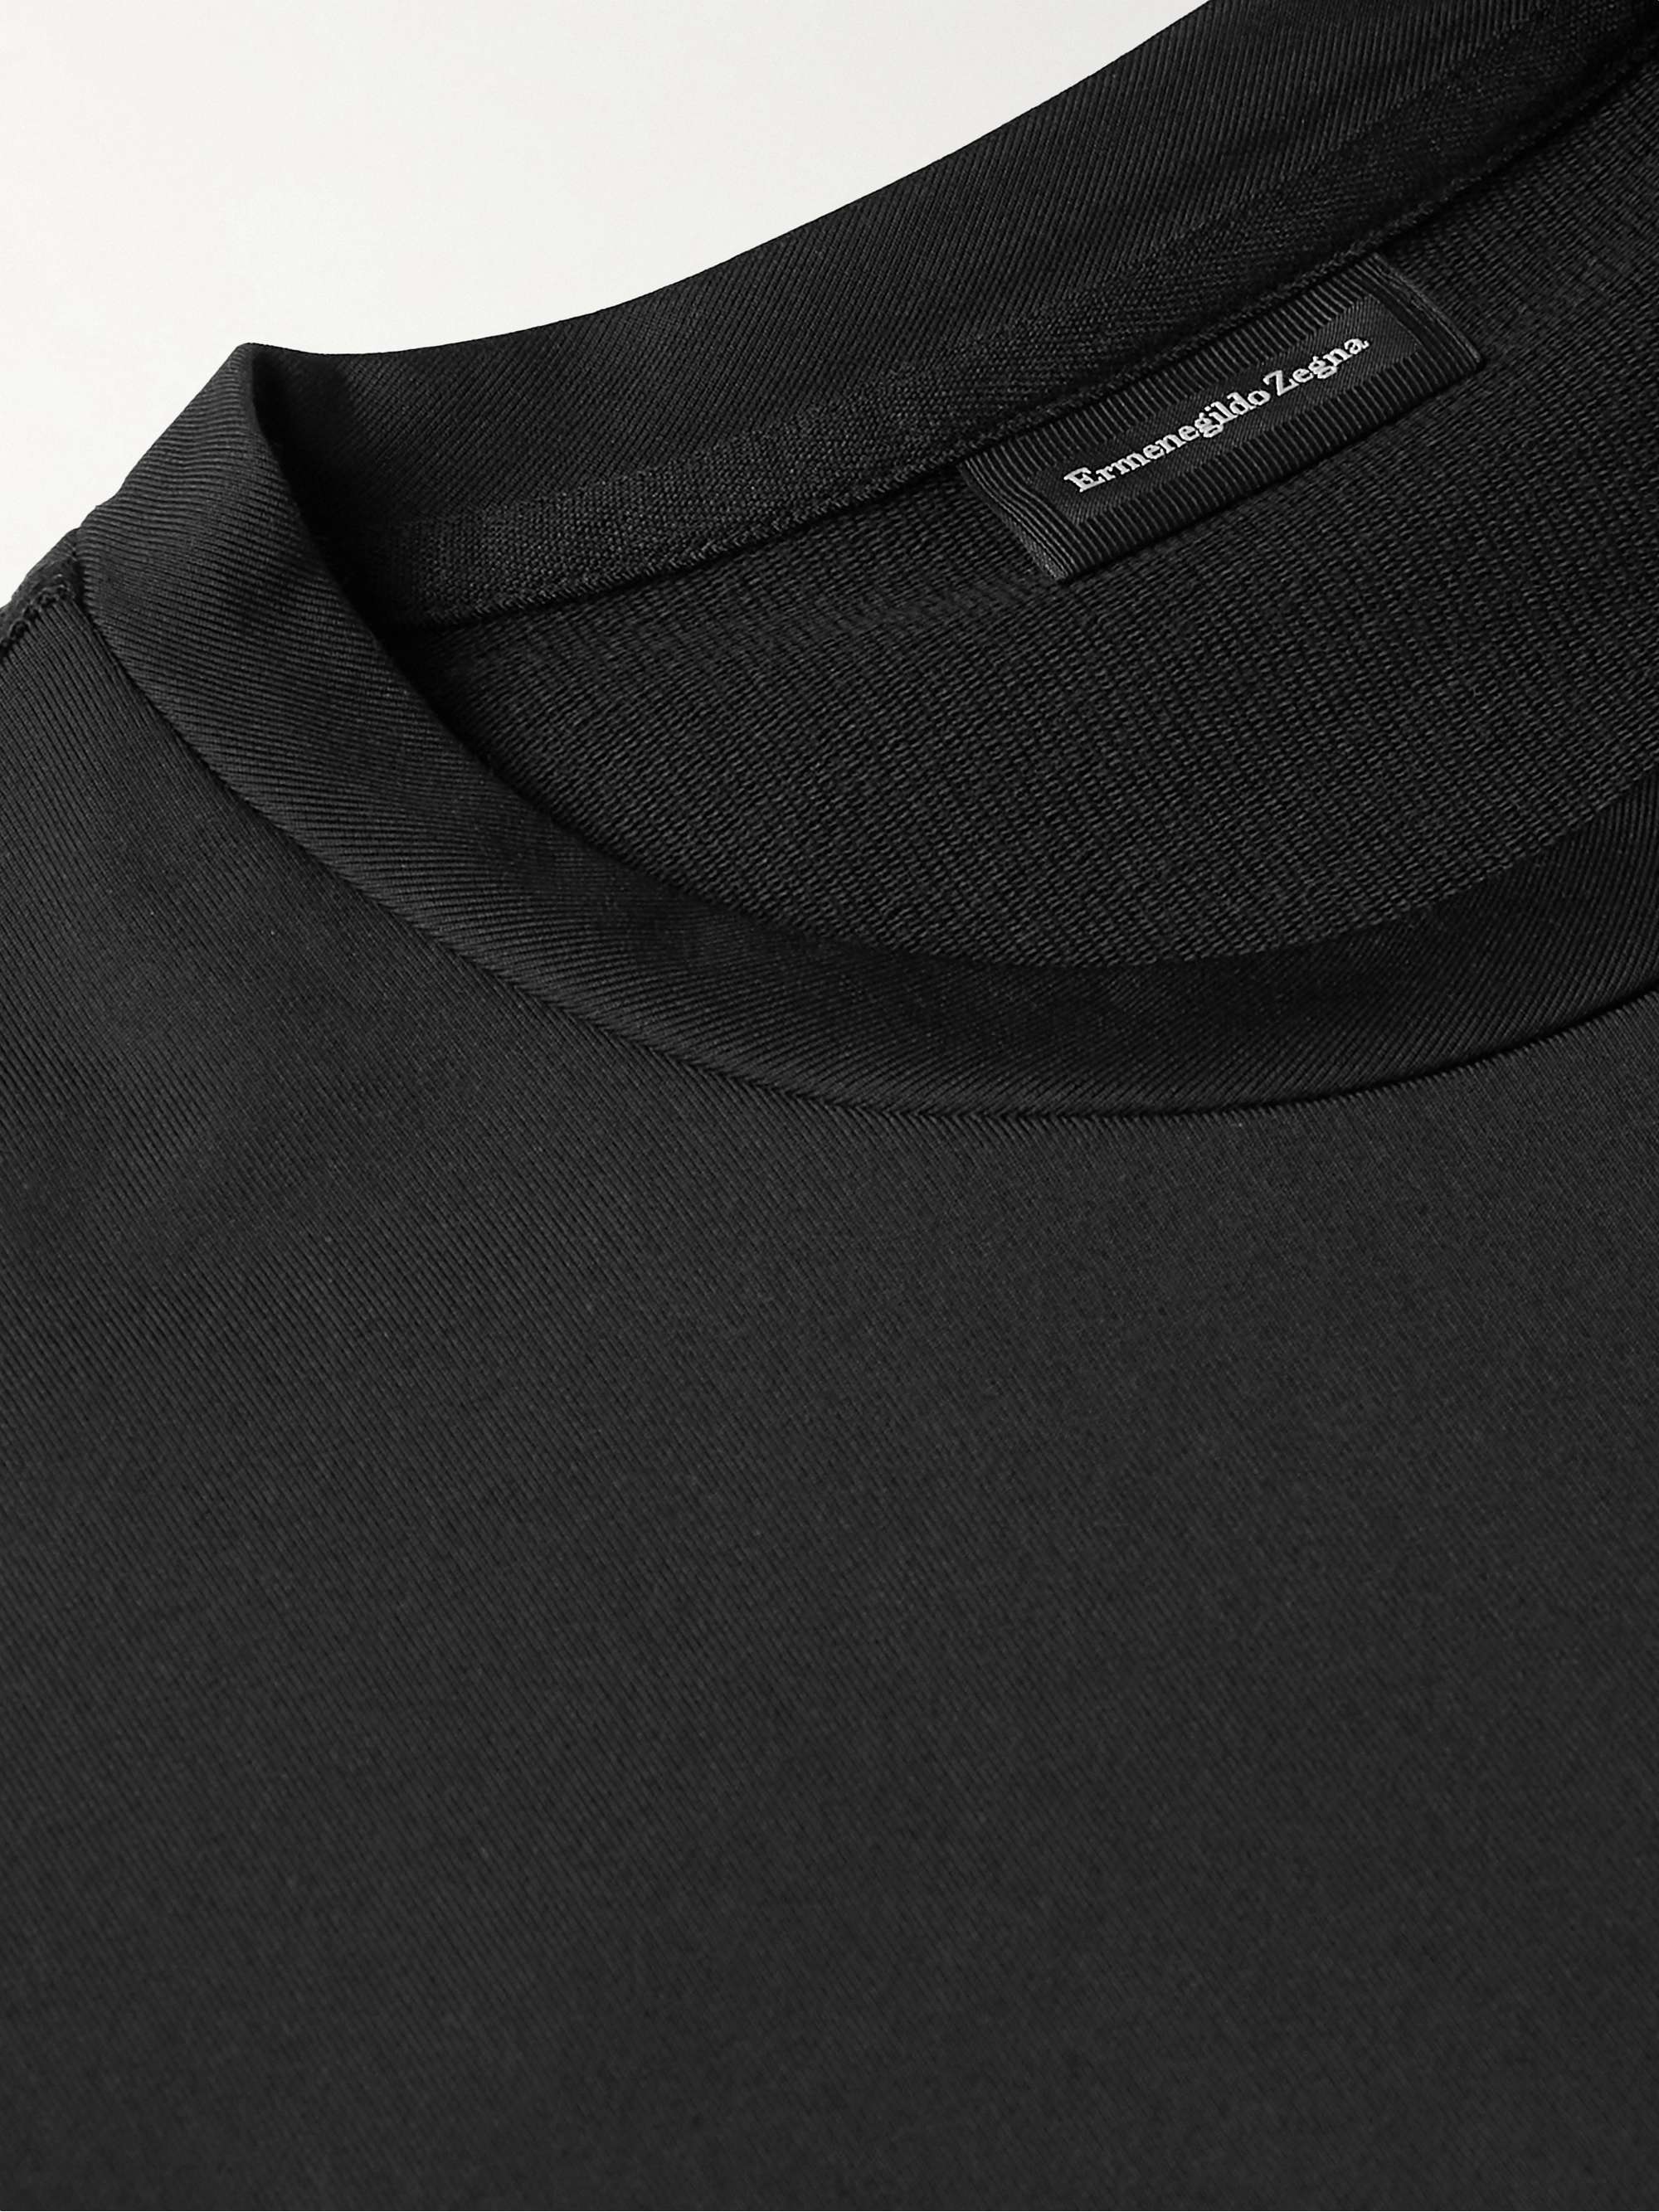 ZEGNA Logo-Print Stretch-Jersey T-Shirt